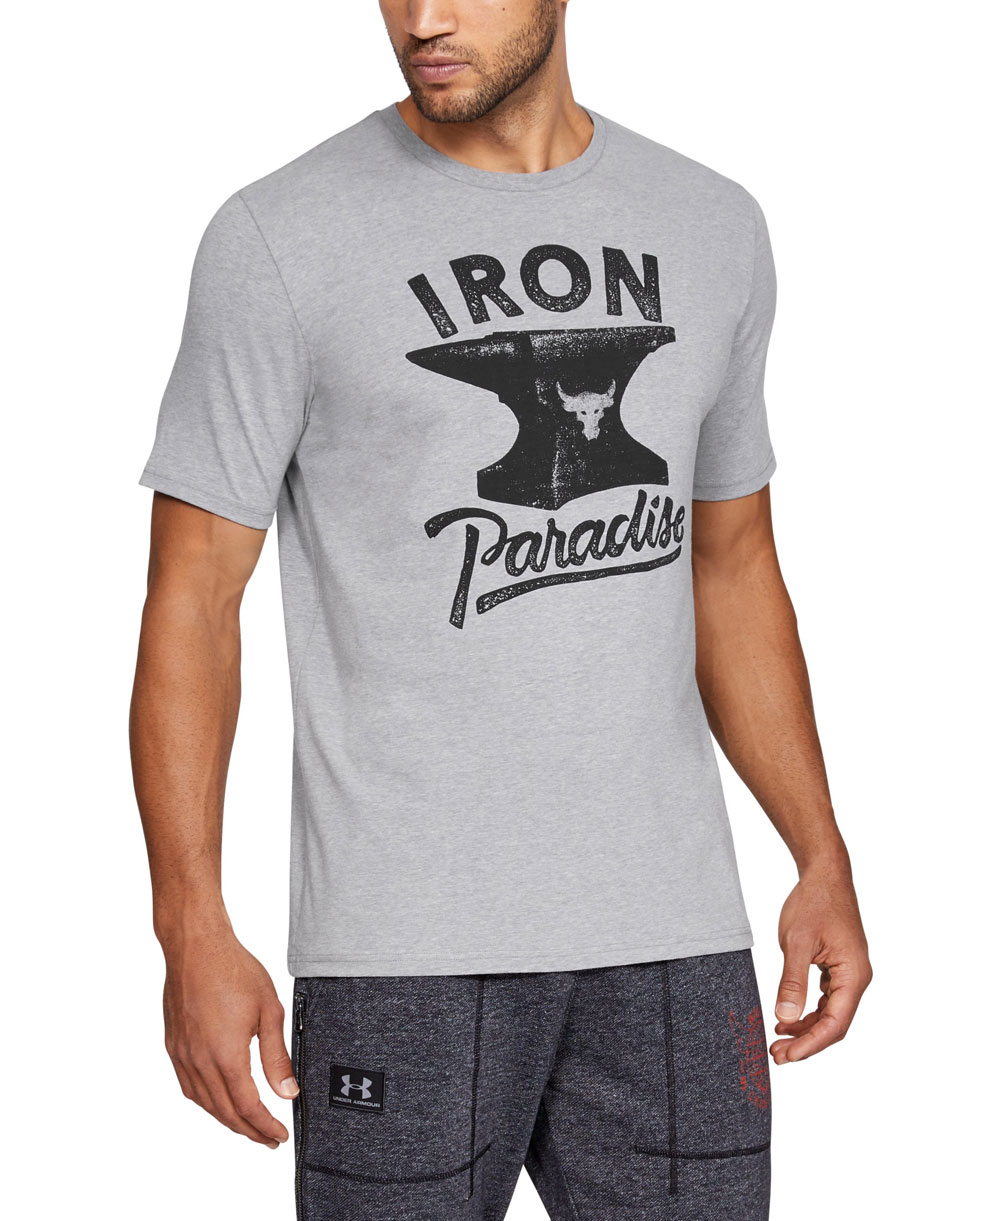 De todos modos testimonio tono Under Armour Project Rock Iron Paradise Camiseta Manga Corta para H...